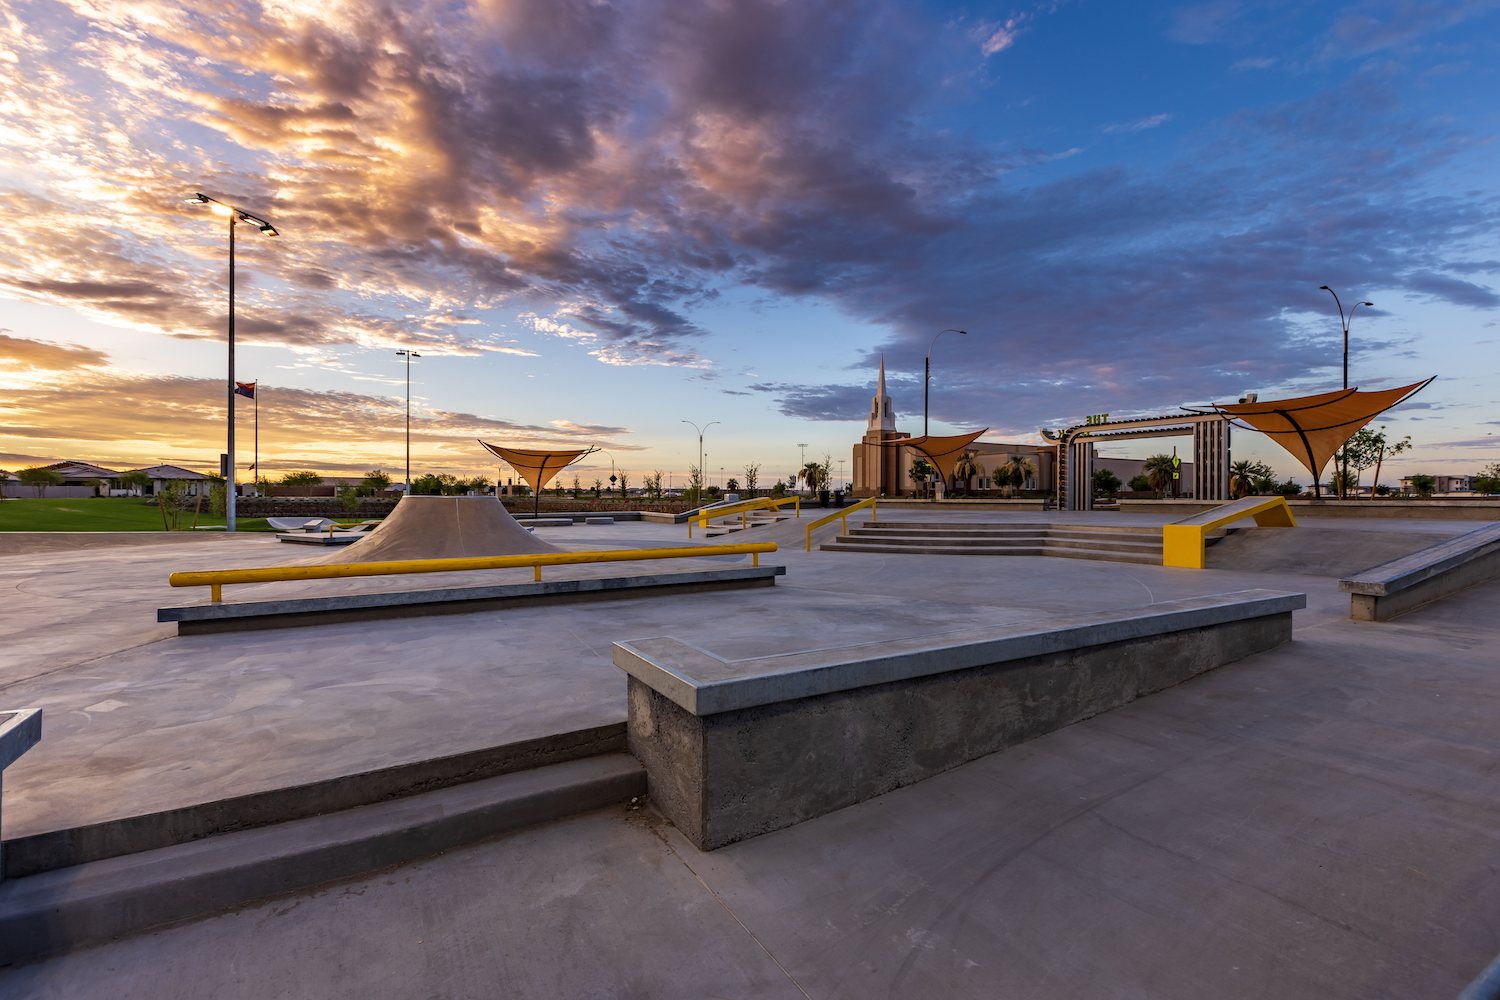 The Deck skatepark